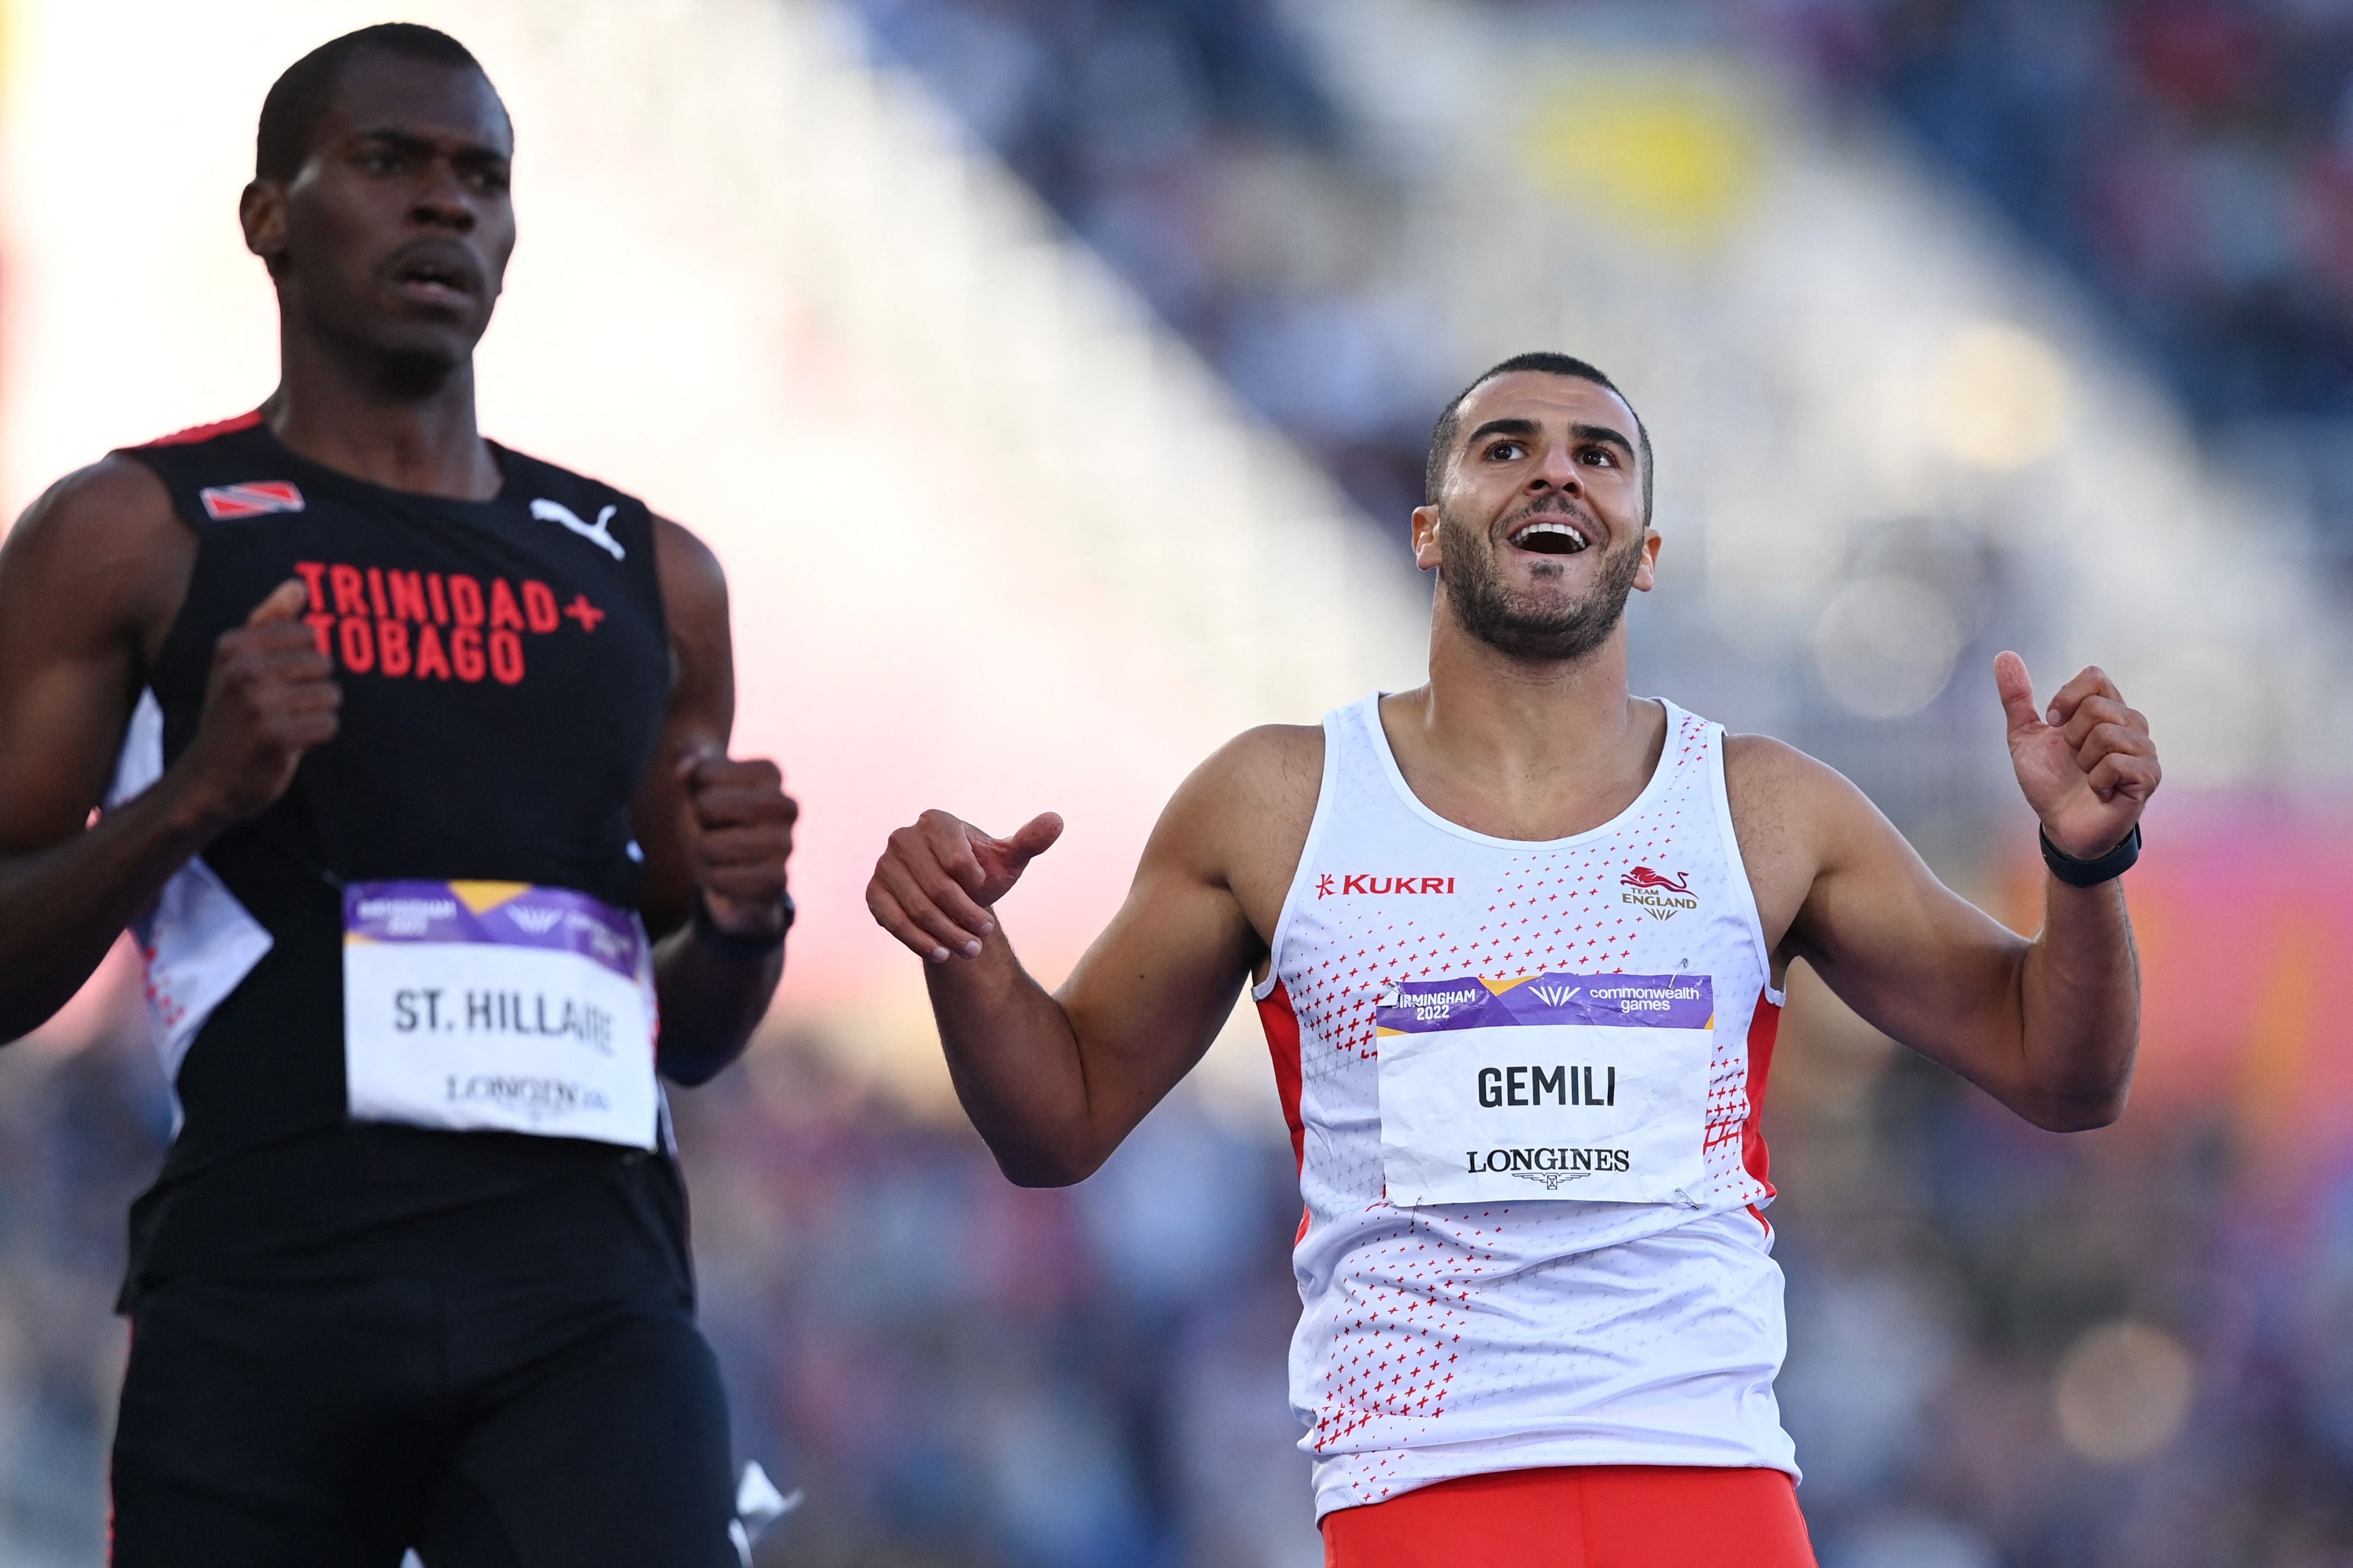 Adam Gemili reacts after the men’s 200m semi-finals